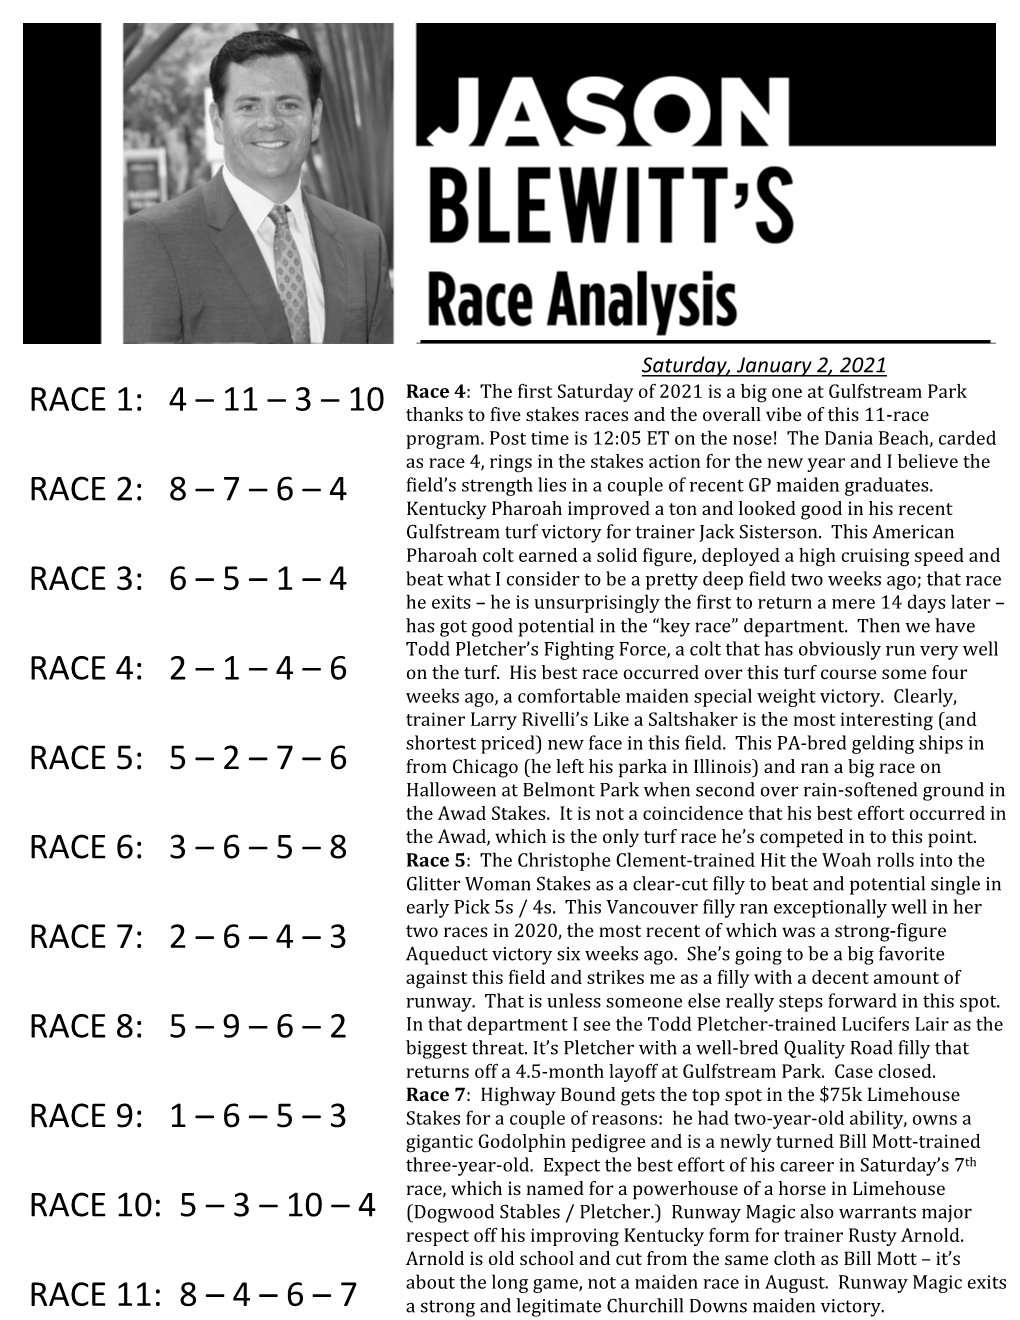 4 Race 3: 6 – 5